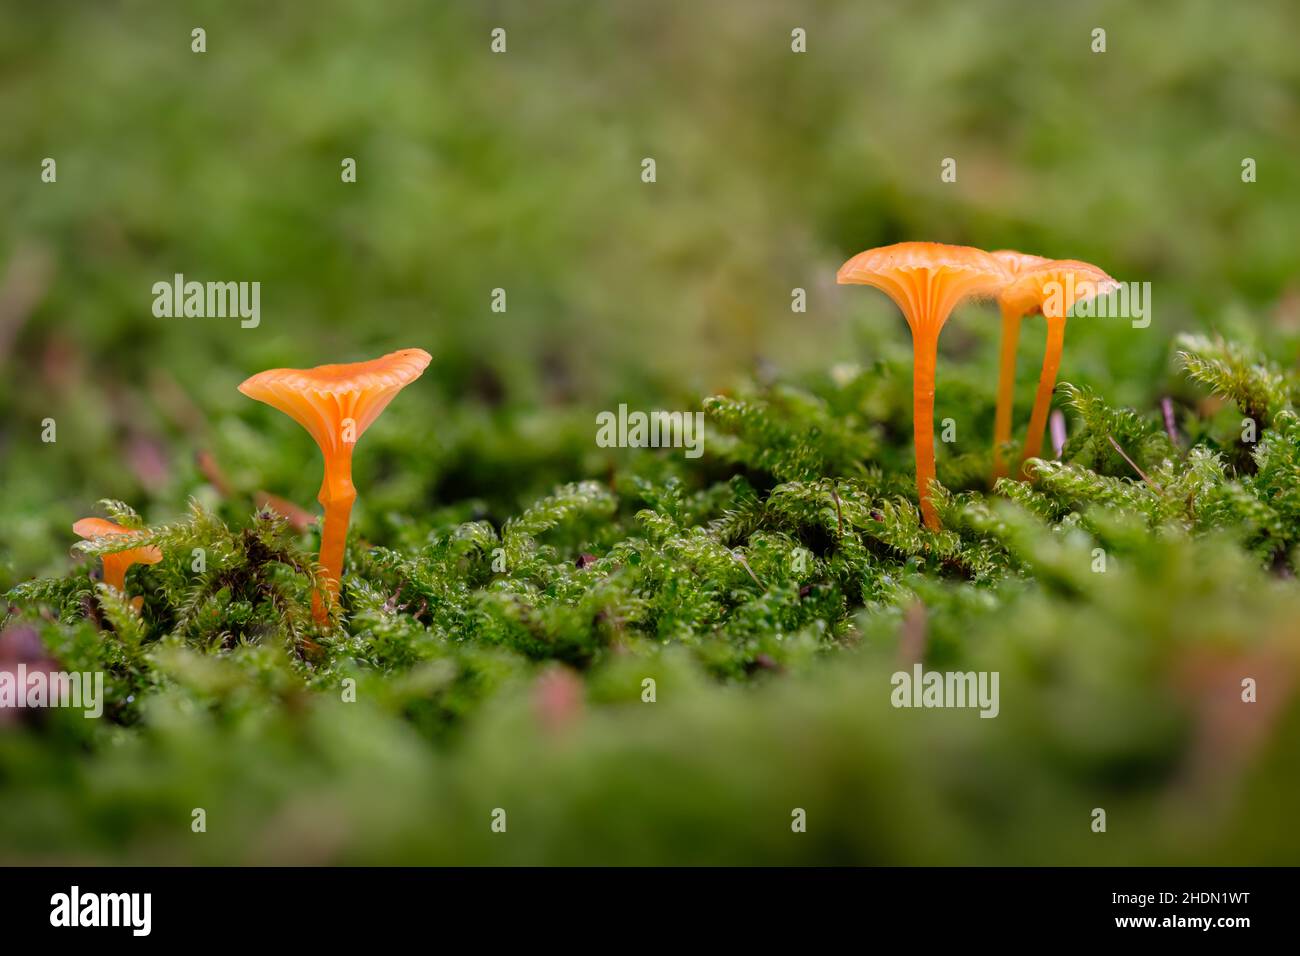 waxcap, mushroom genus Stock Photo